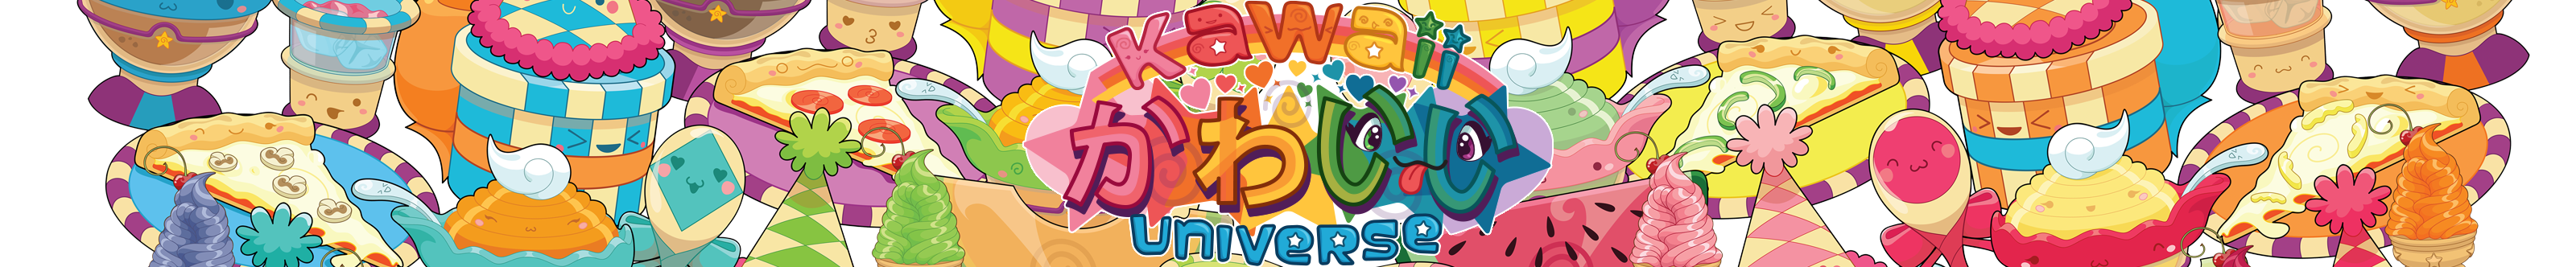 Kawaii Universe's profile banner